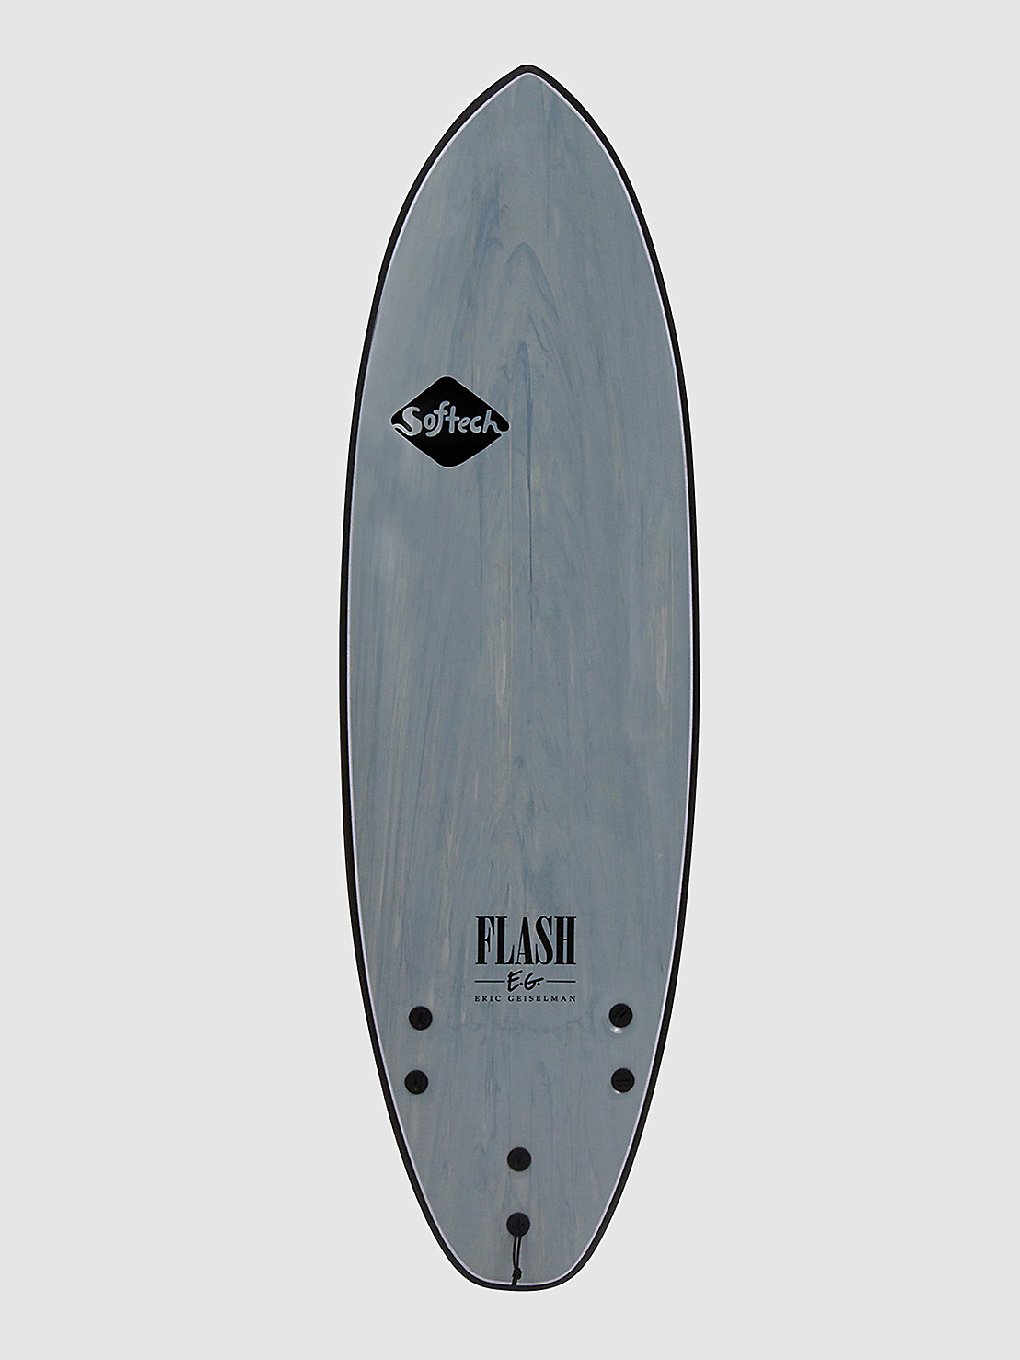 Softech Flash Eric Geiselman FCS II 6'6 Surfboard grijs